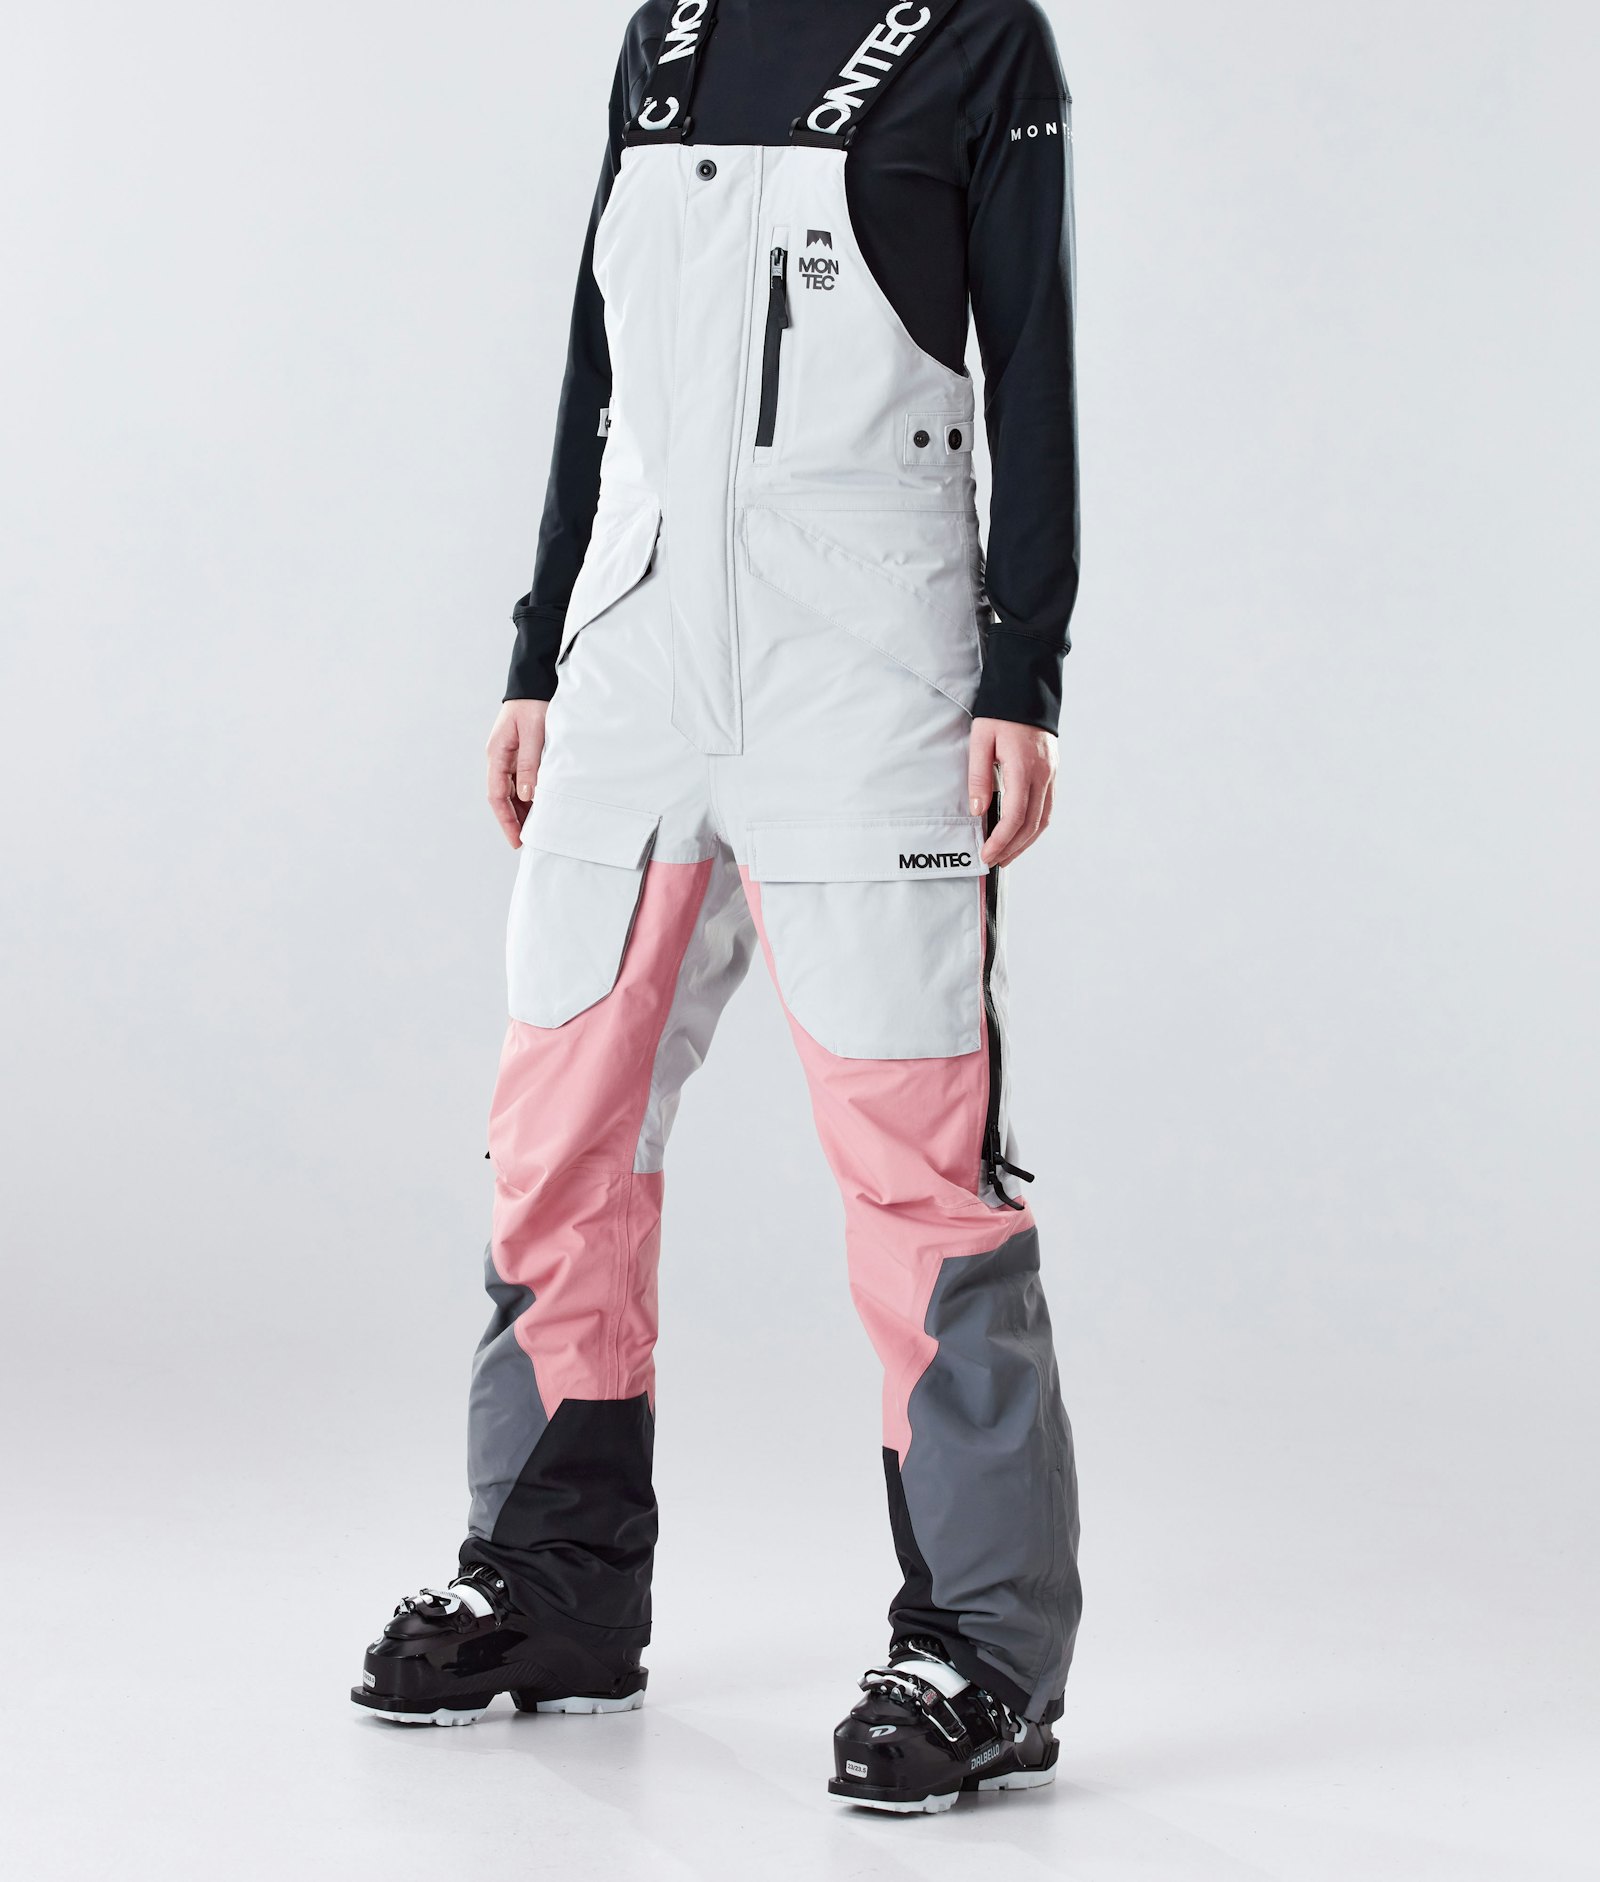 Fawk W 2020 Skihose Damen Light Grey/Pink/Light Pearl